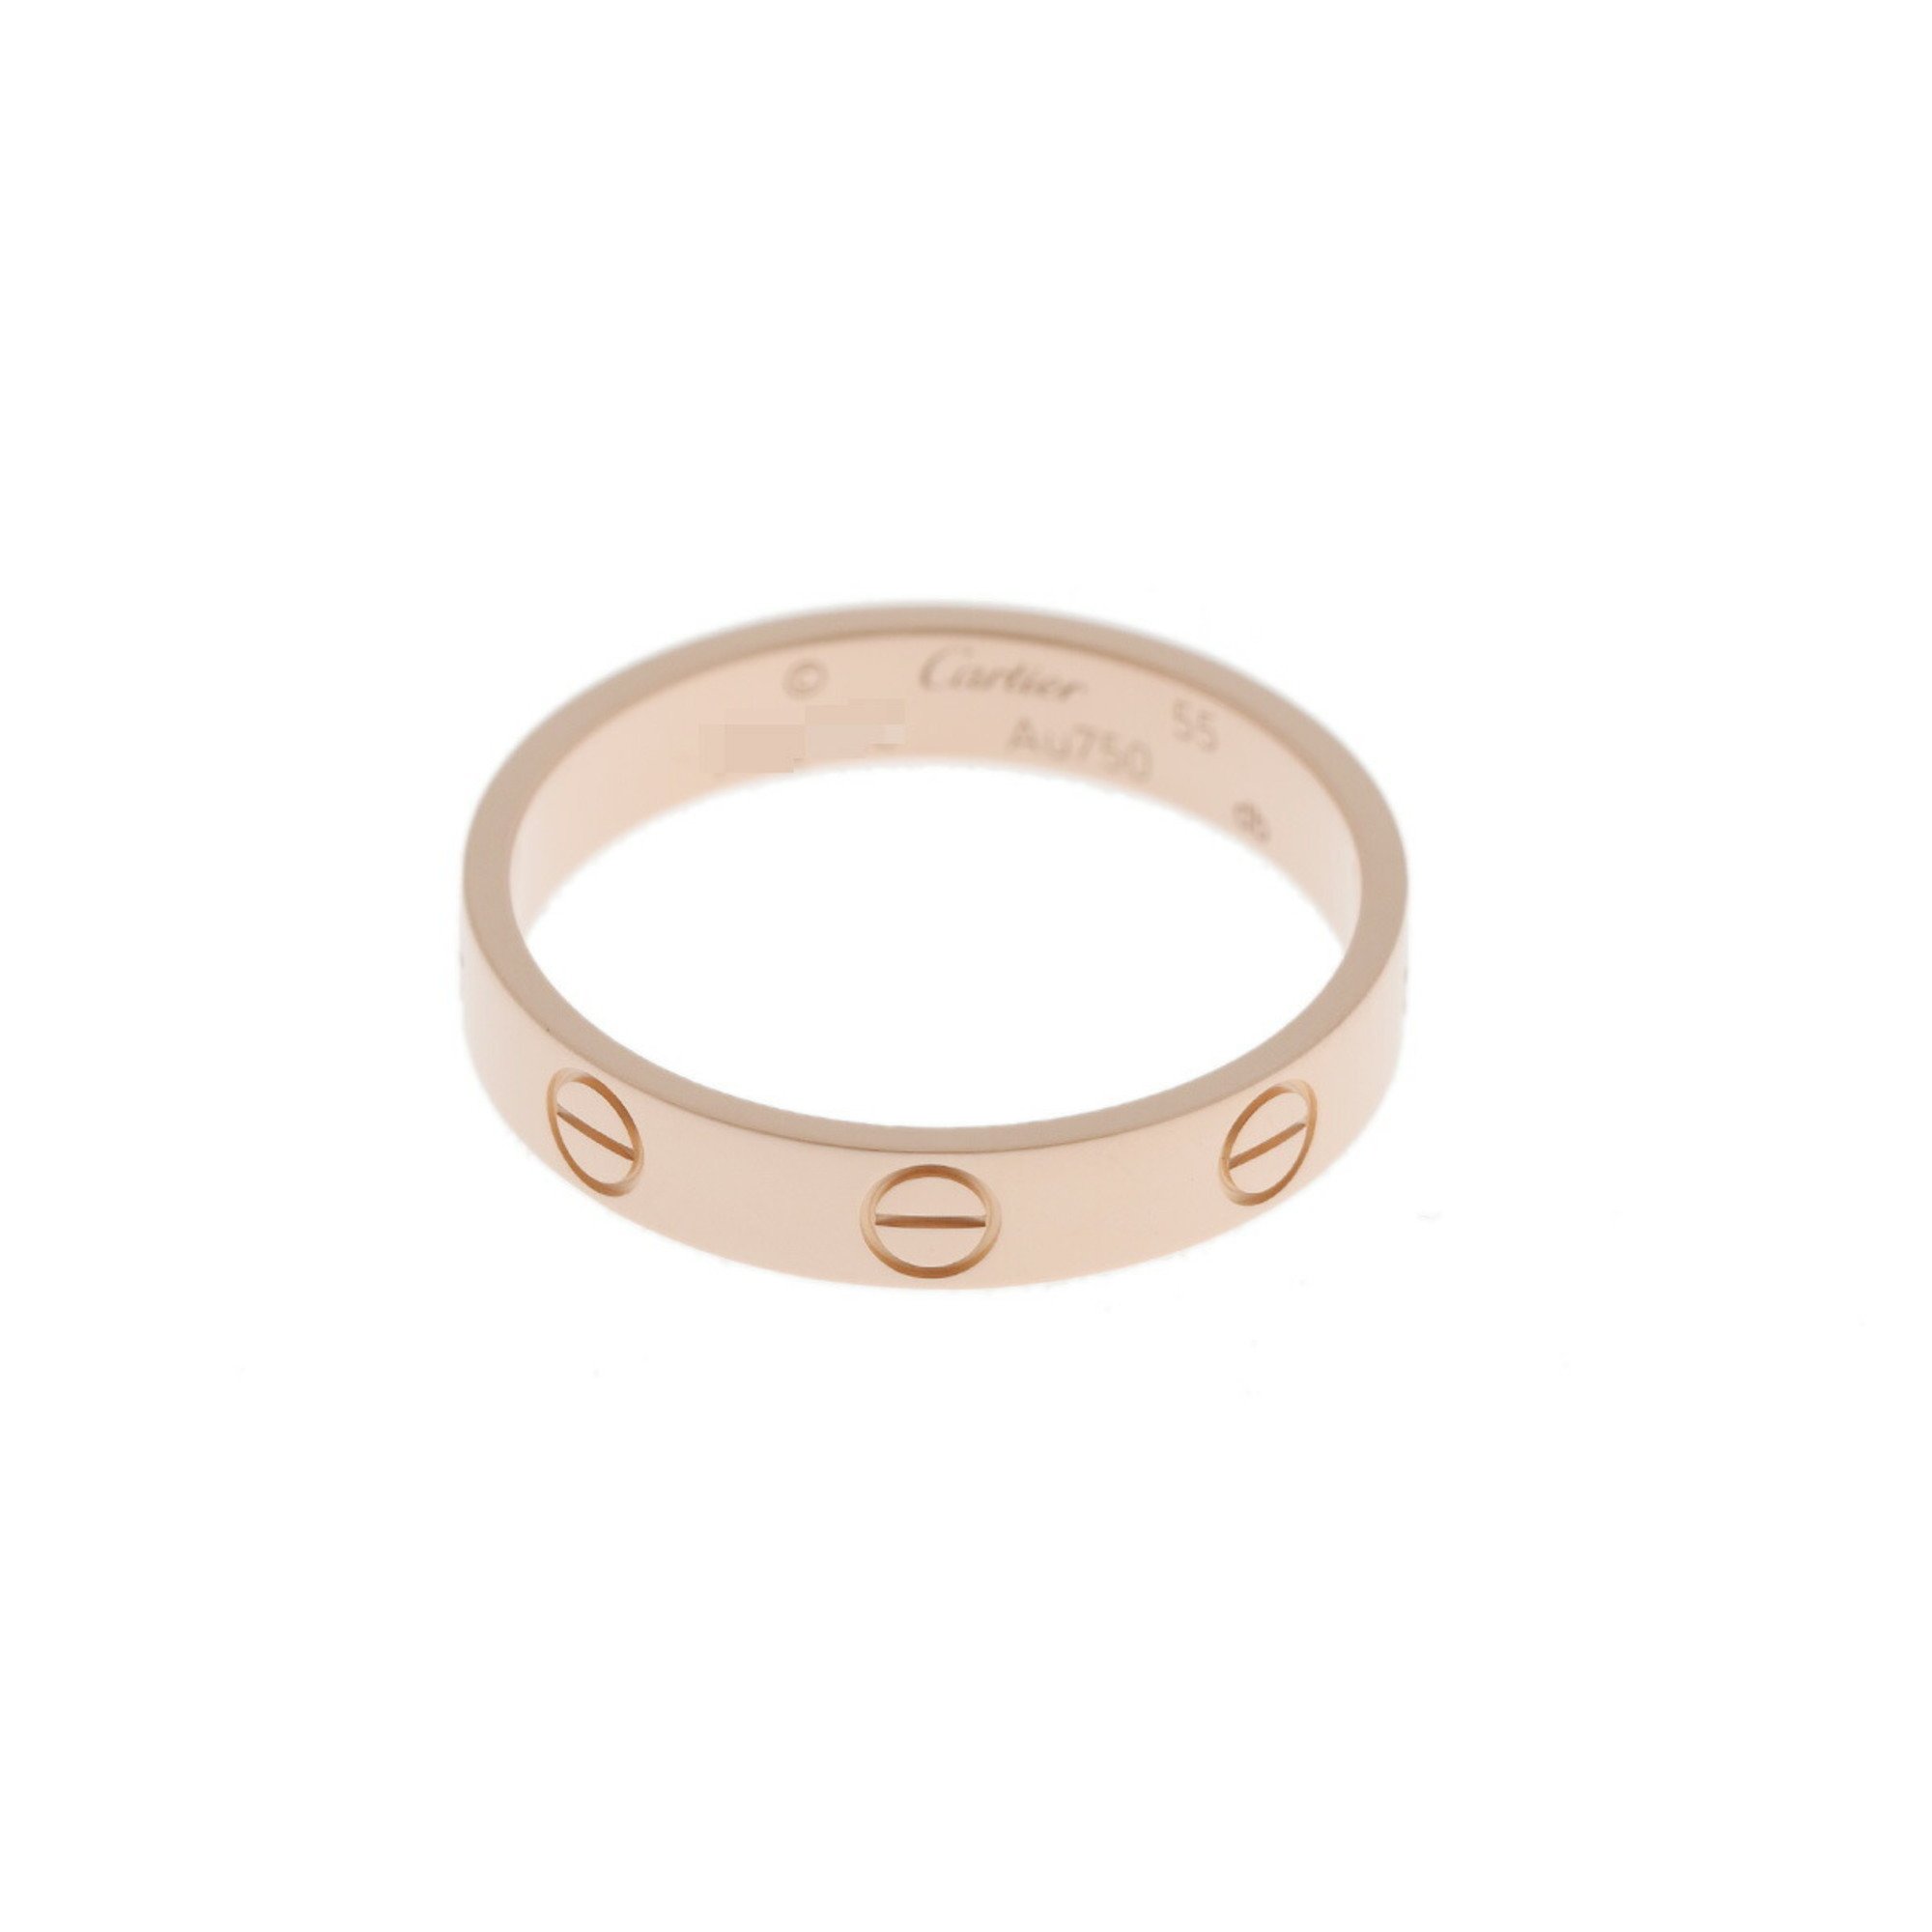 CARTIER Love Ring #55 - Size 15 Women's K18 Pink Gold